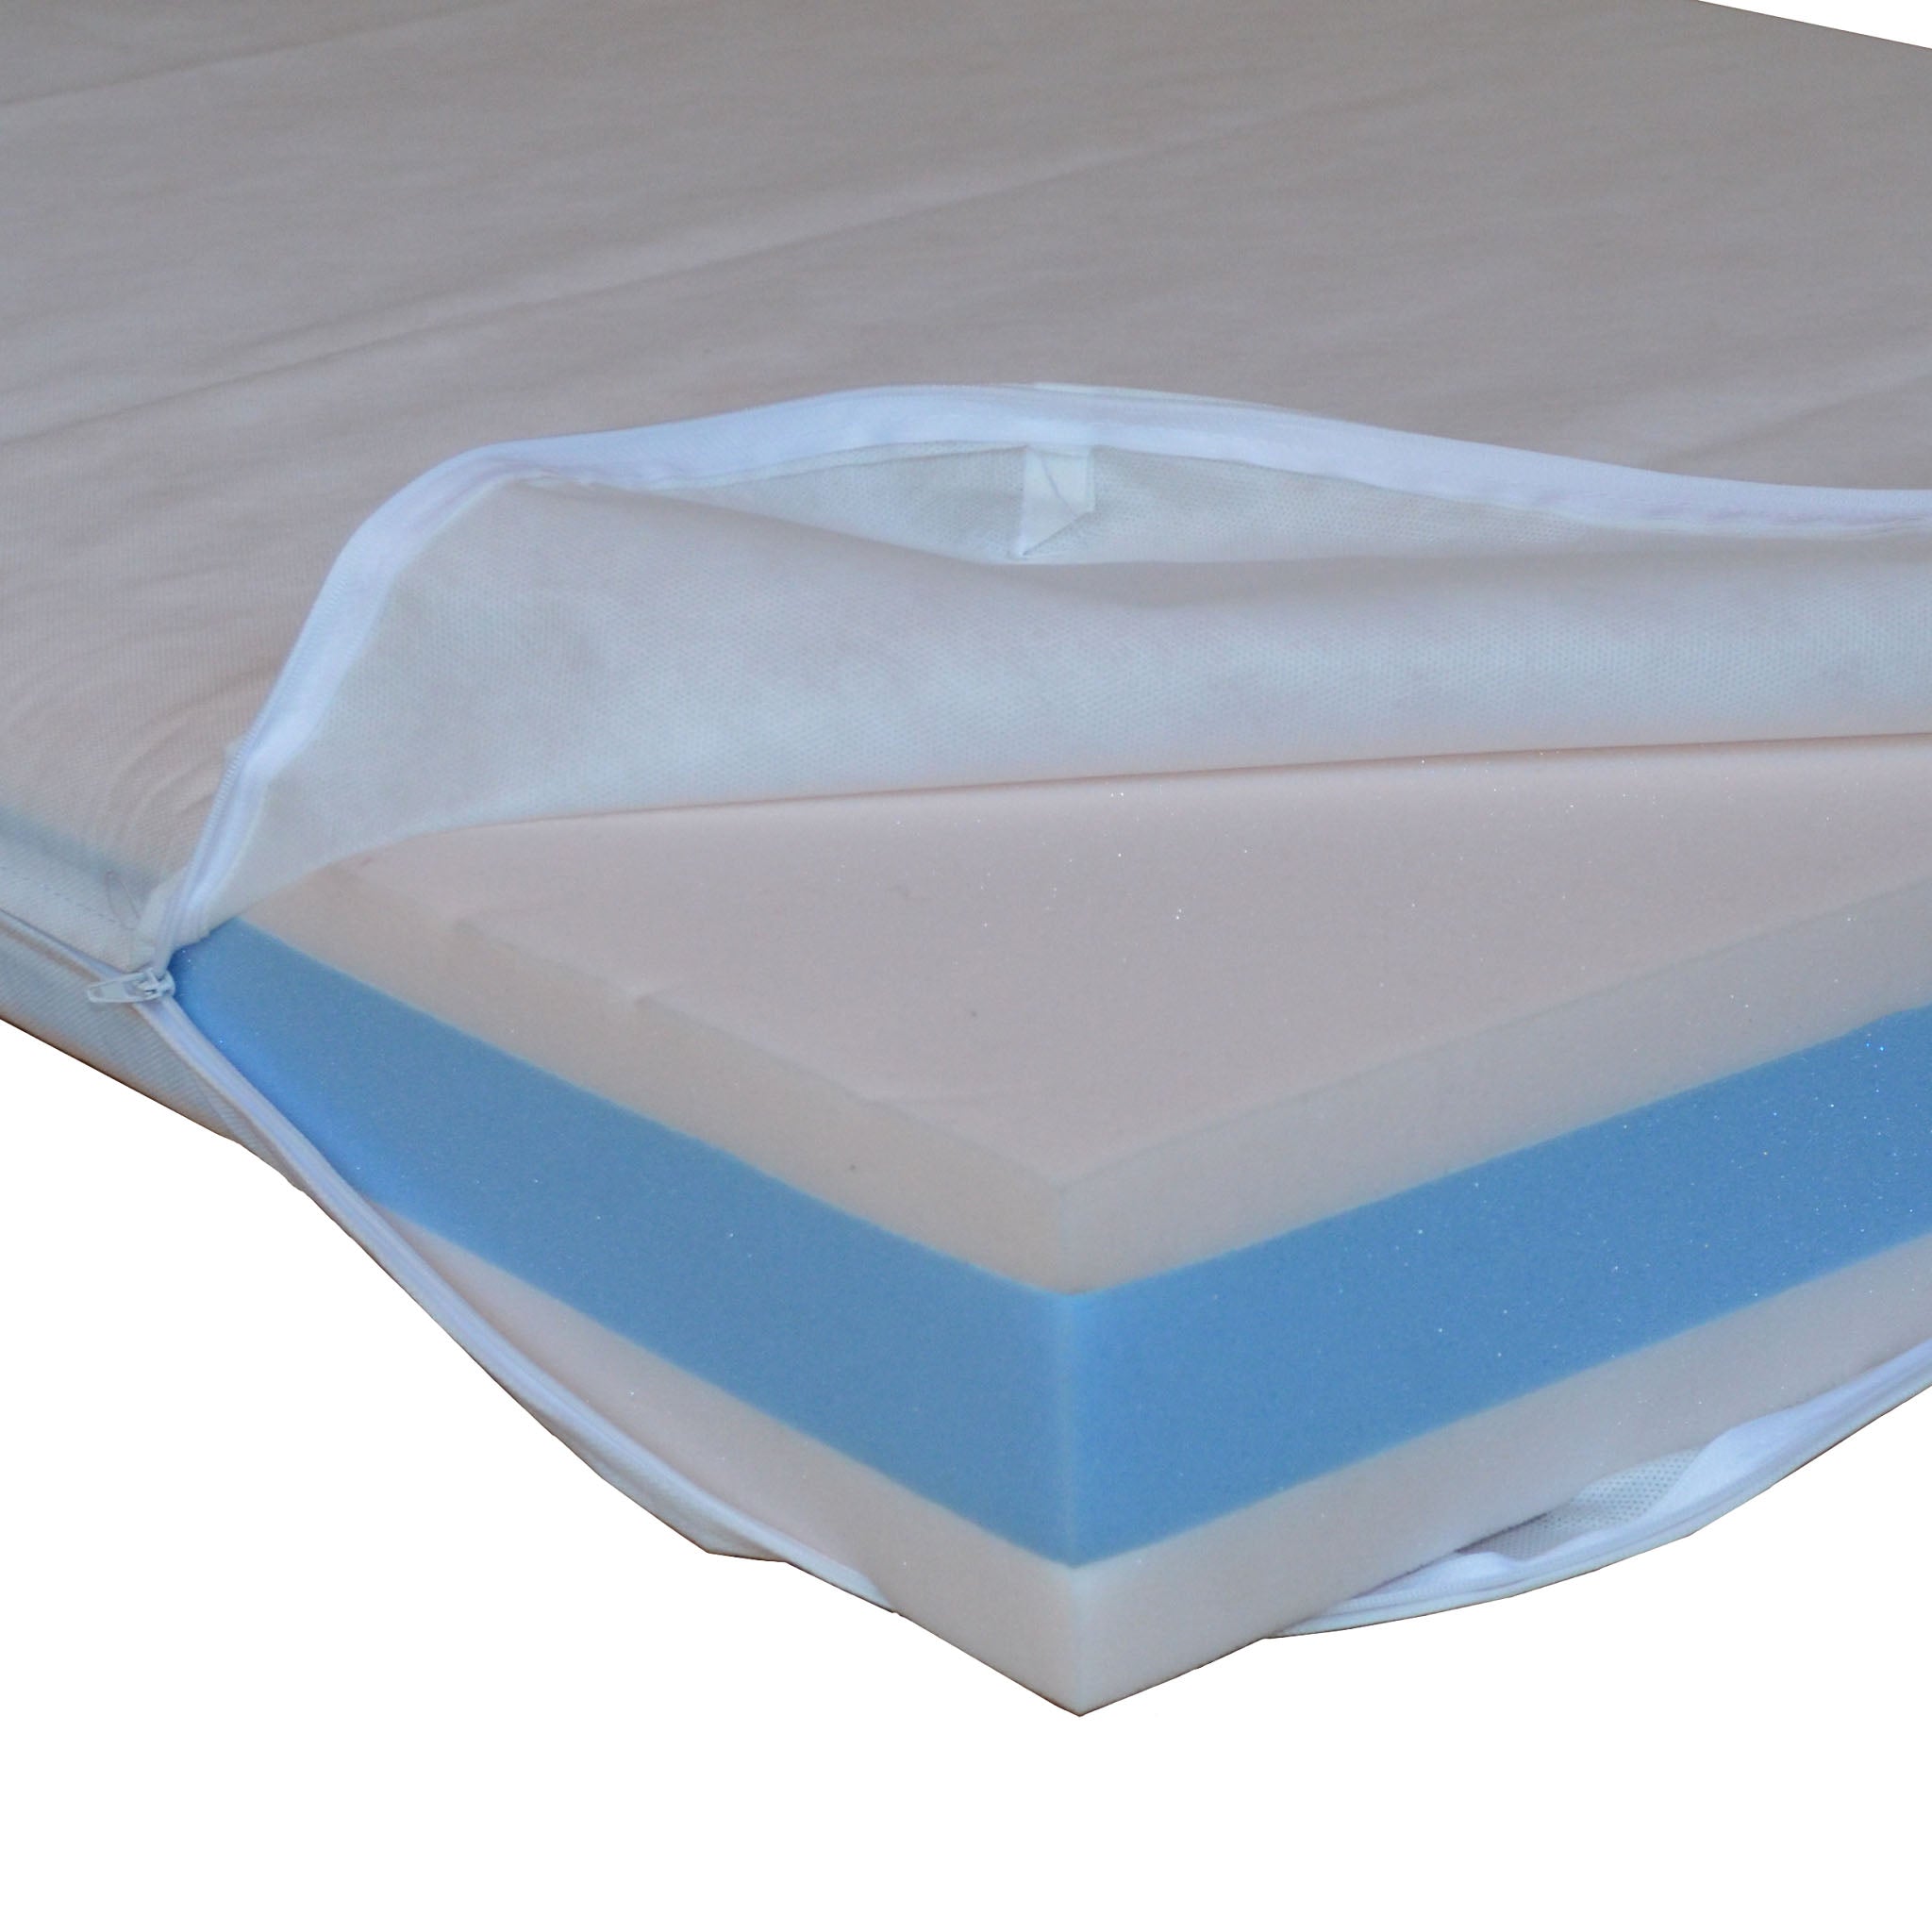 Dog bed cushion combining high density foam with memory foam